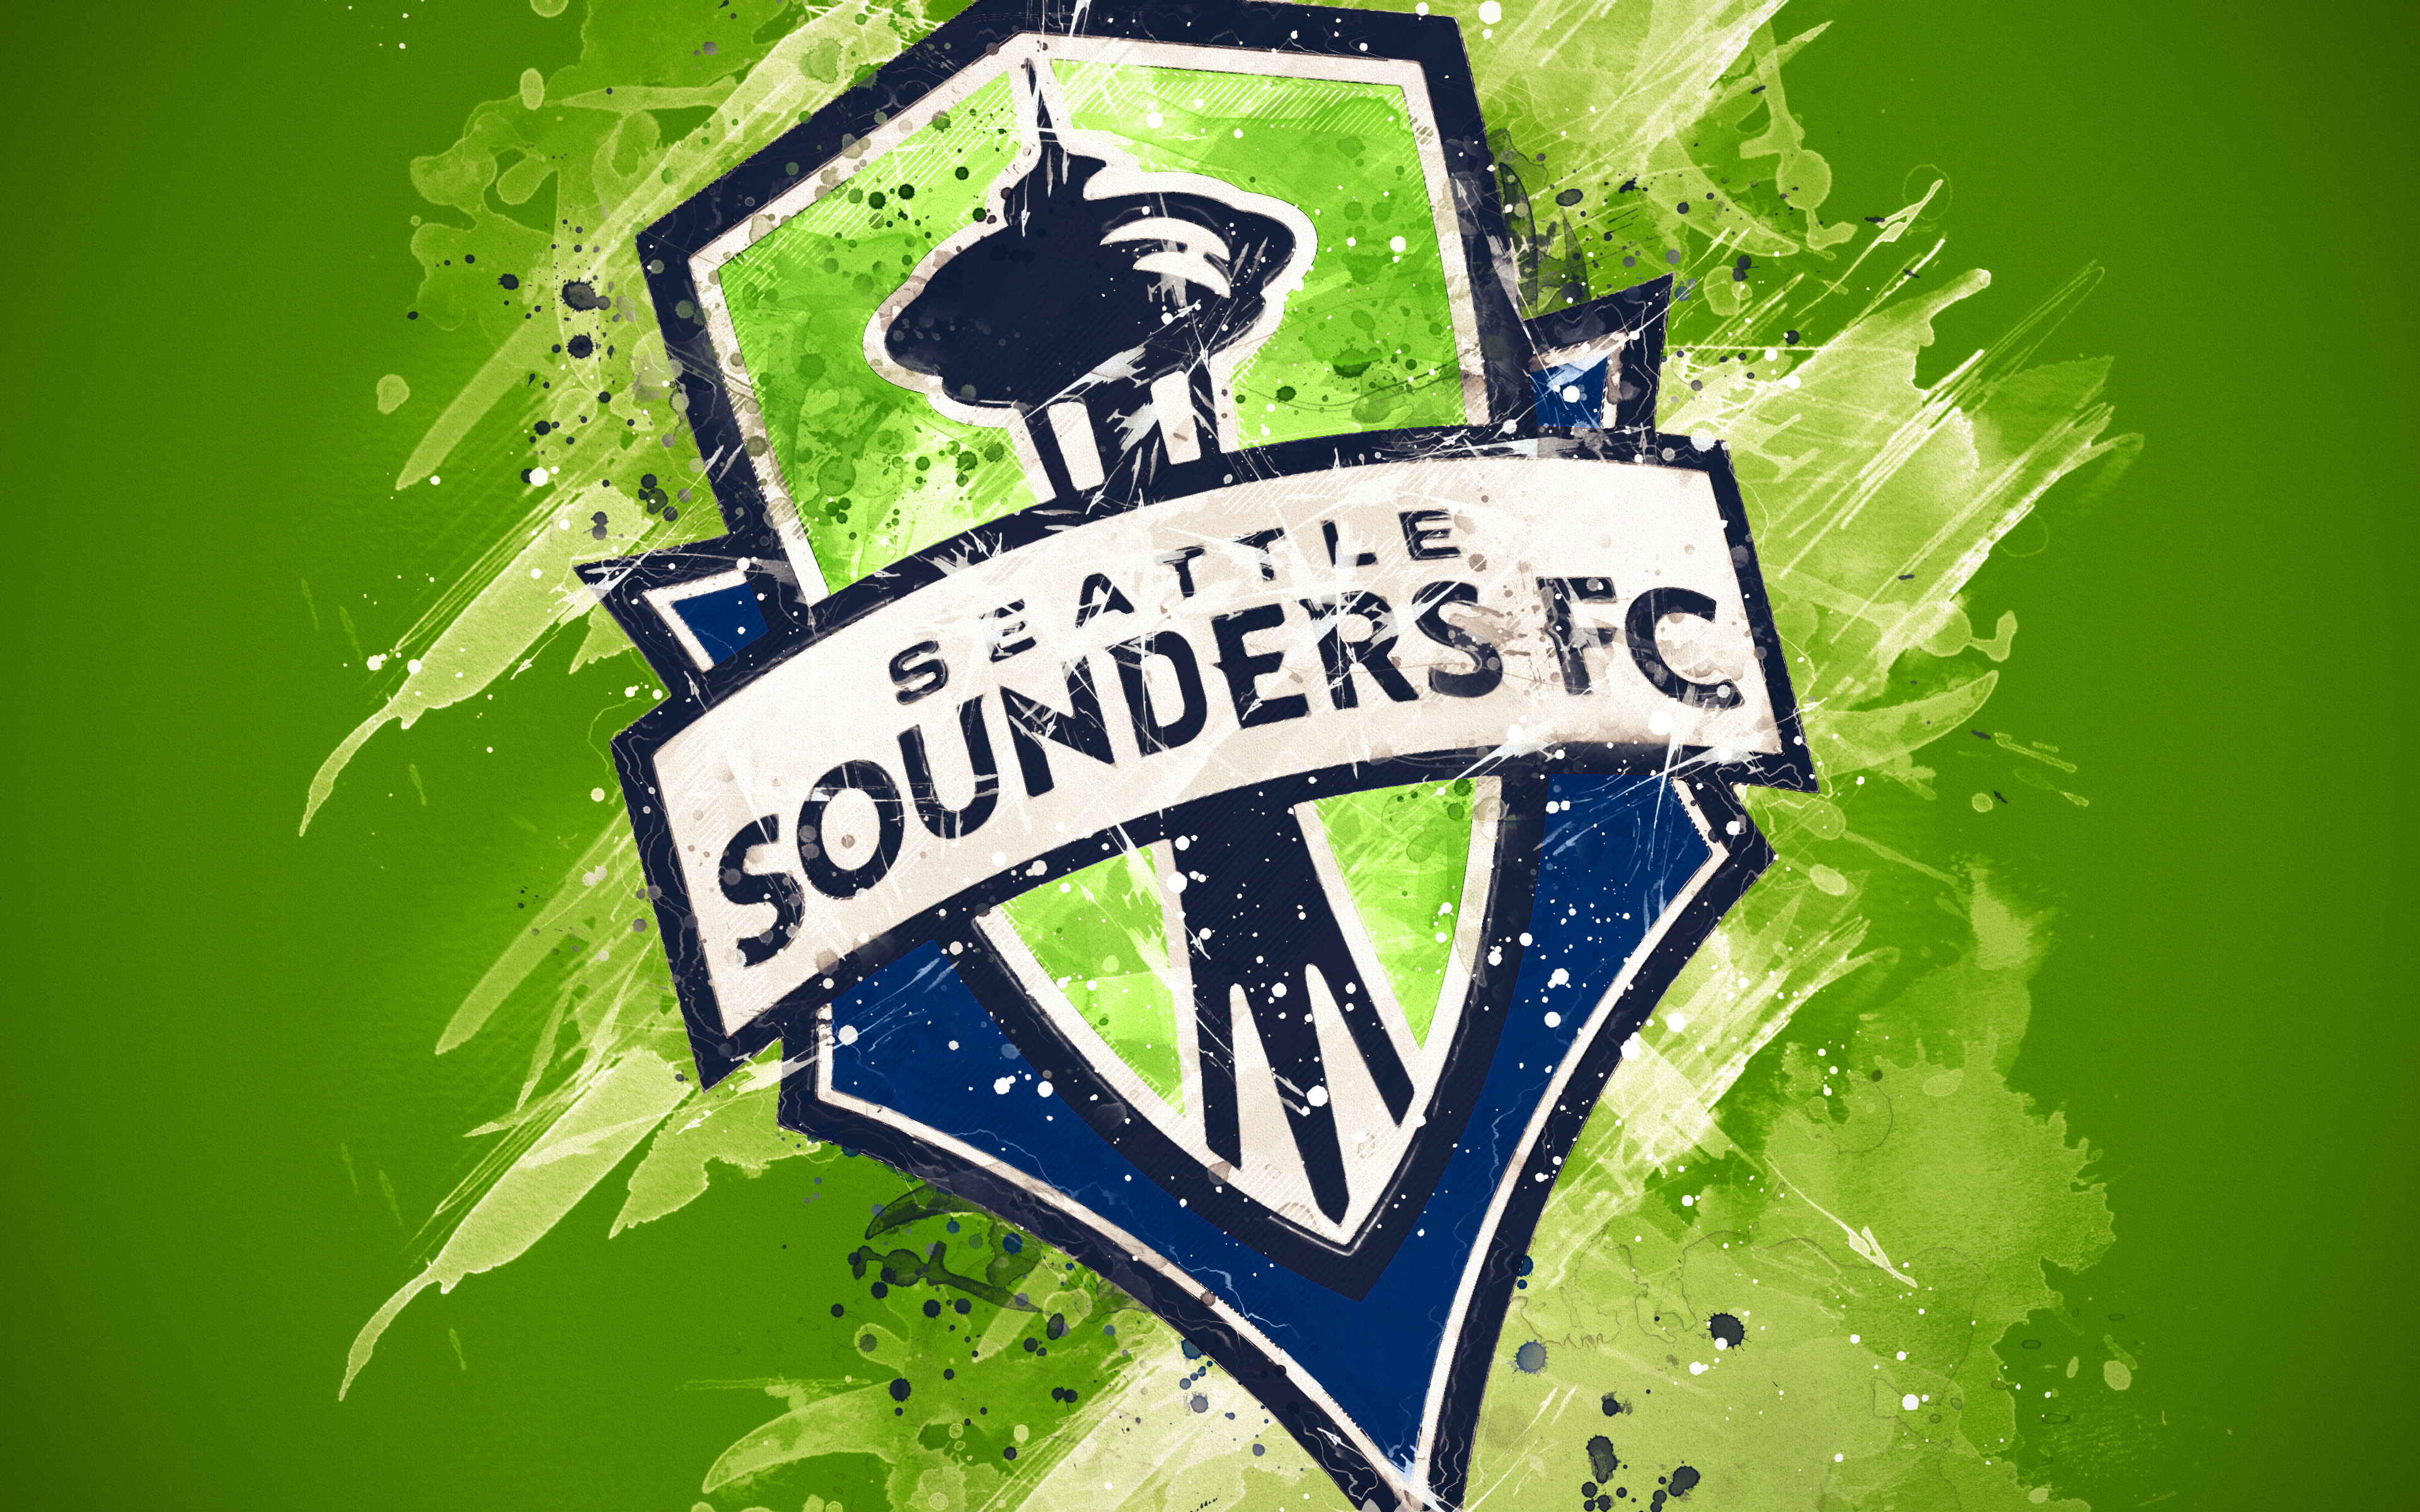 Descarga gratuita de fondo de pantalla para móvil de Fútbol, Logo, Emblema, Deporte, Seattle Sounders Fc, Mls.